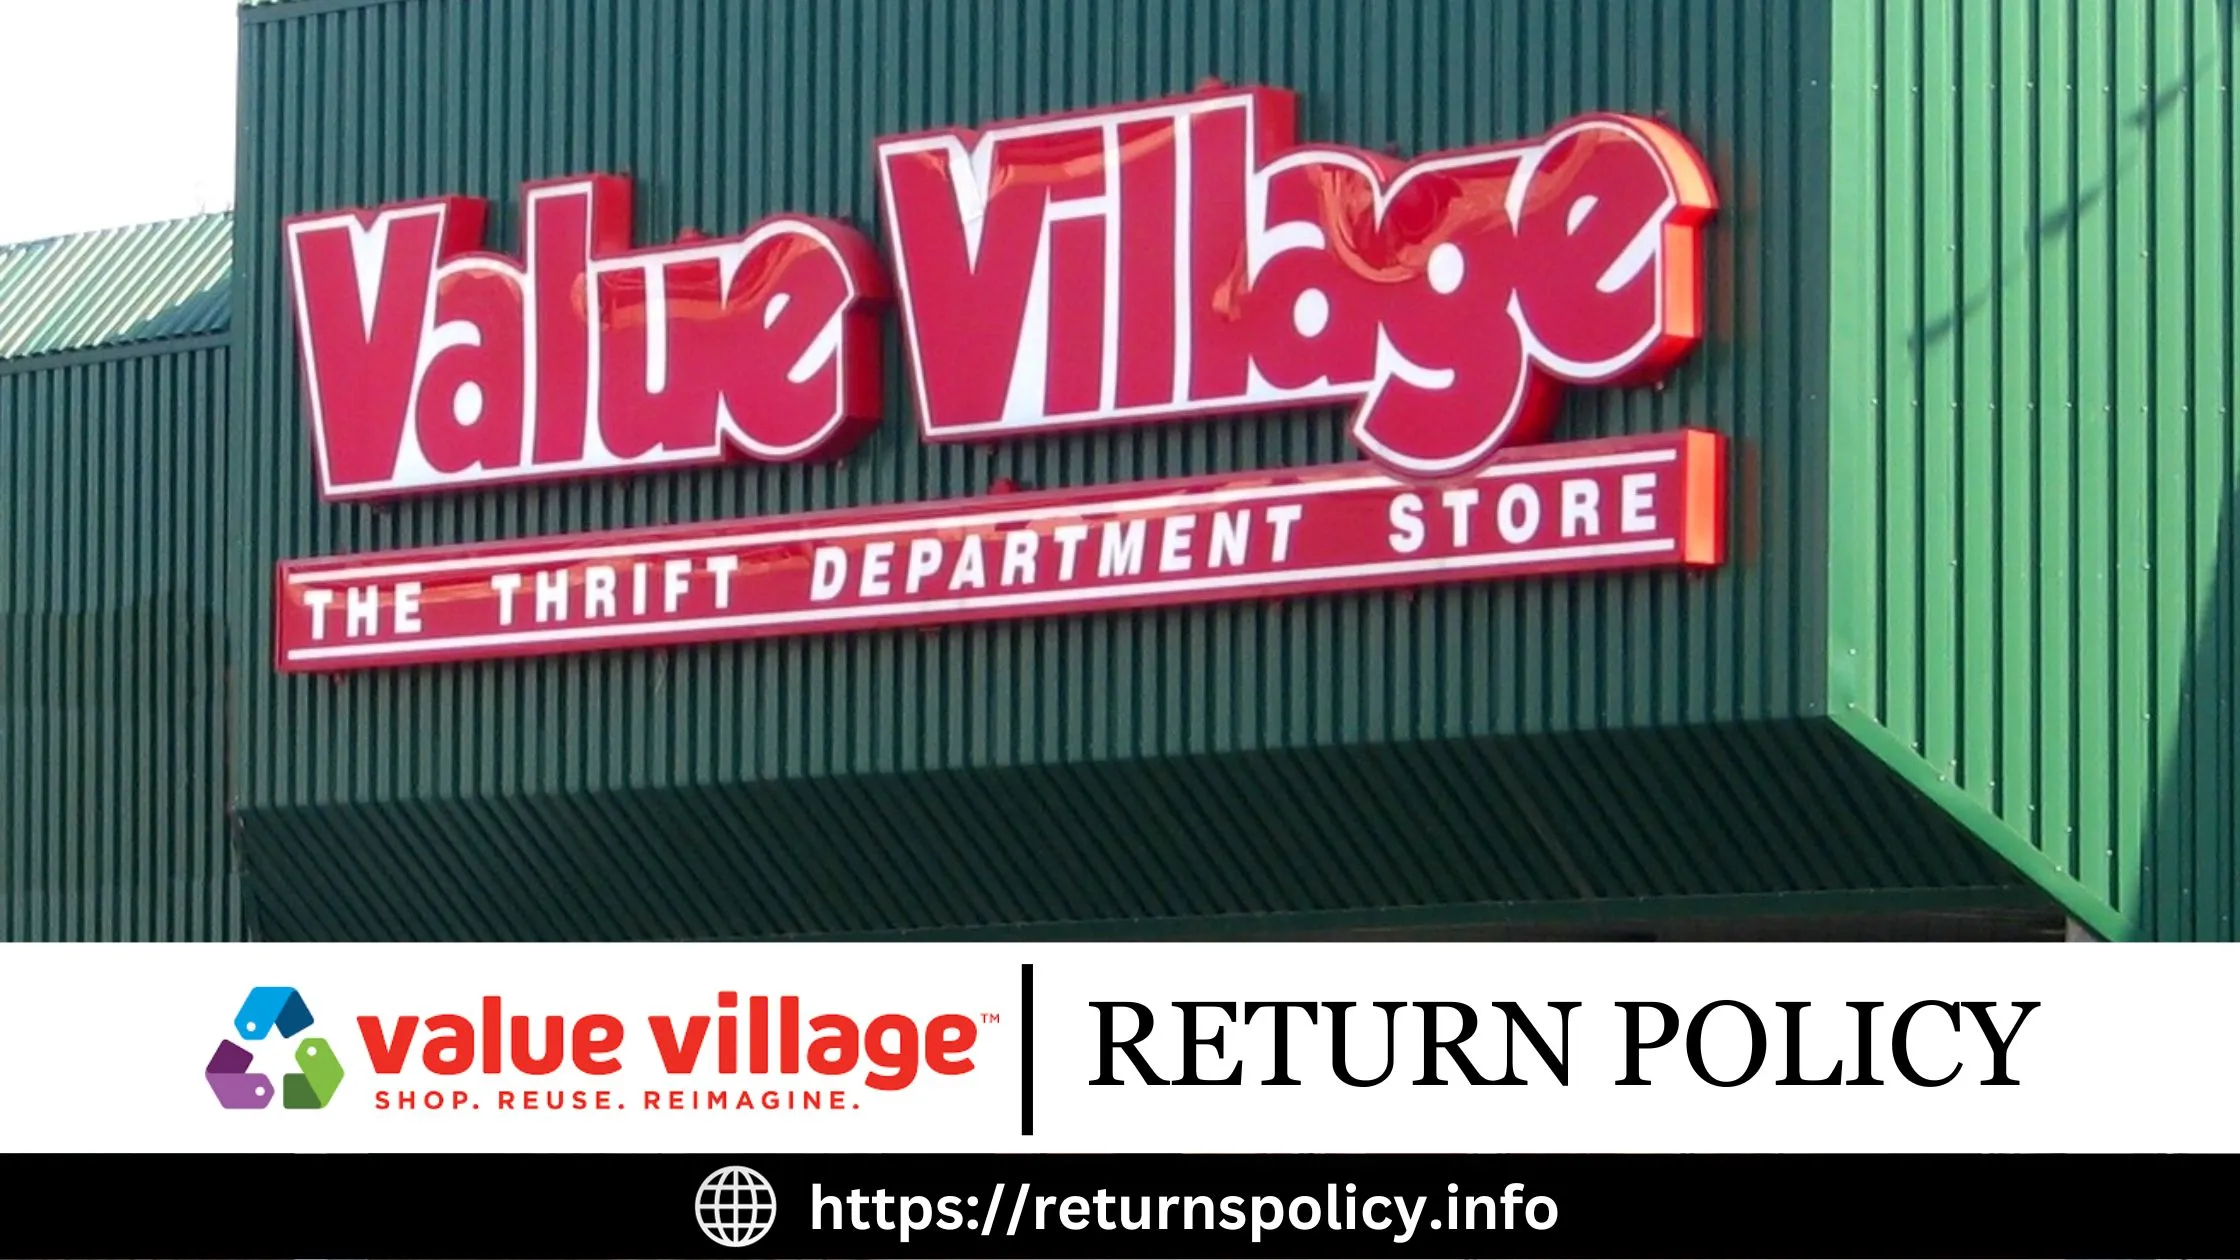 Value Village Return Policy